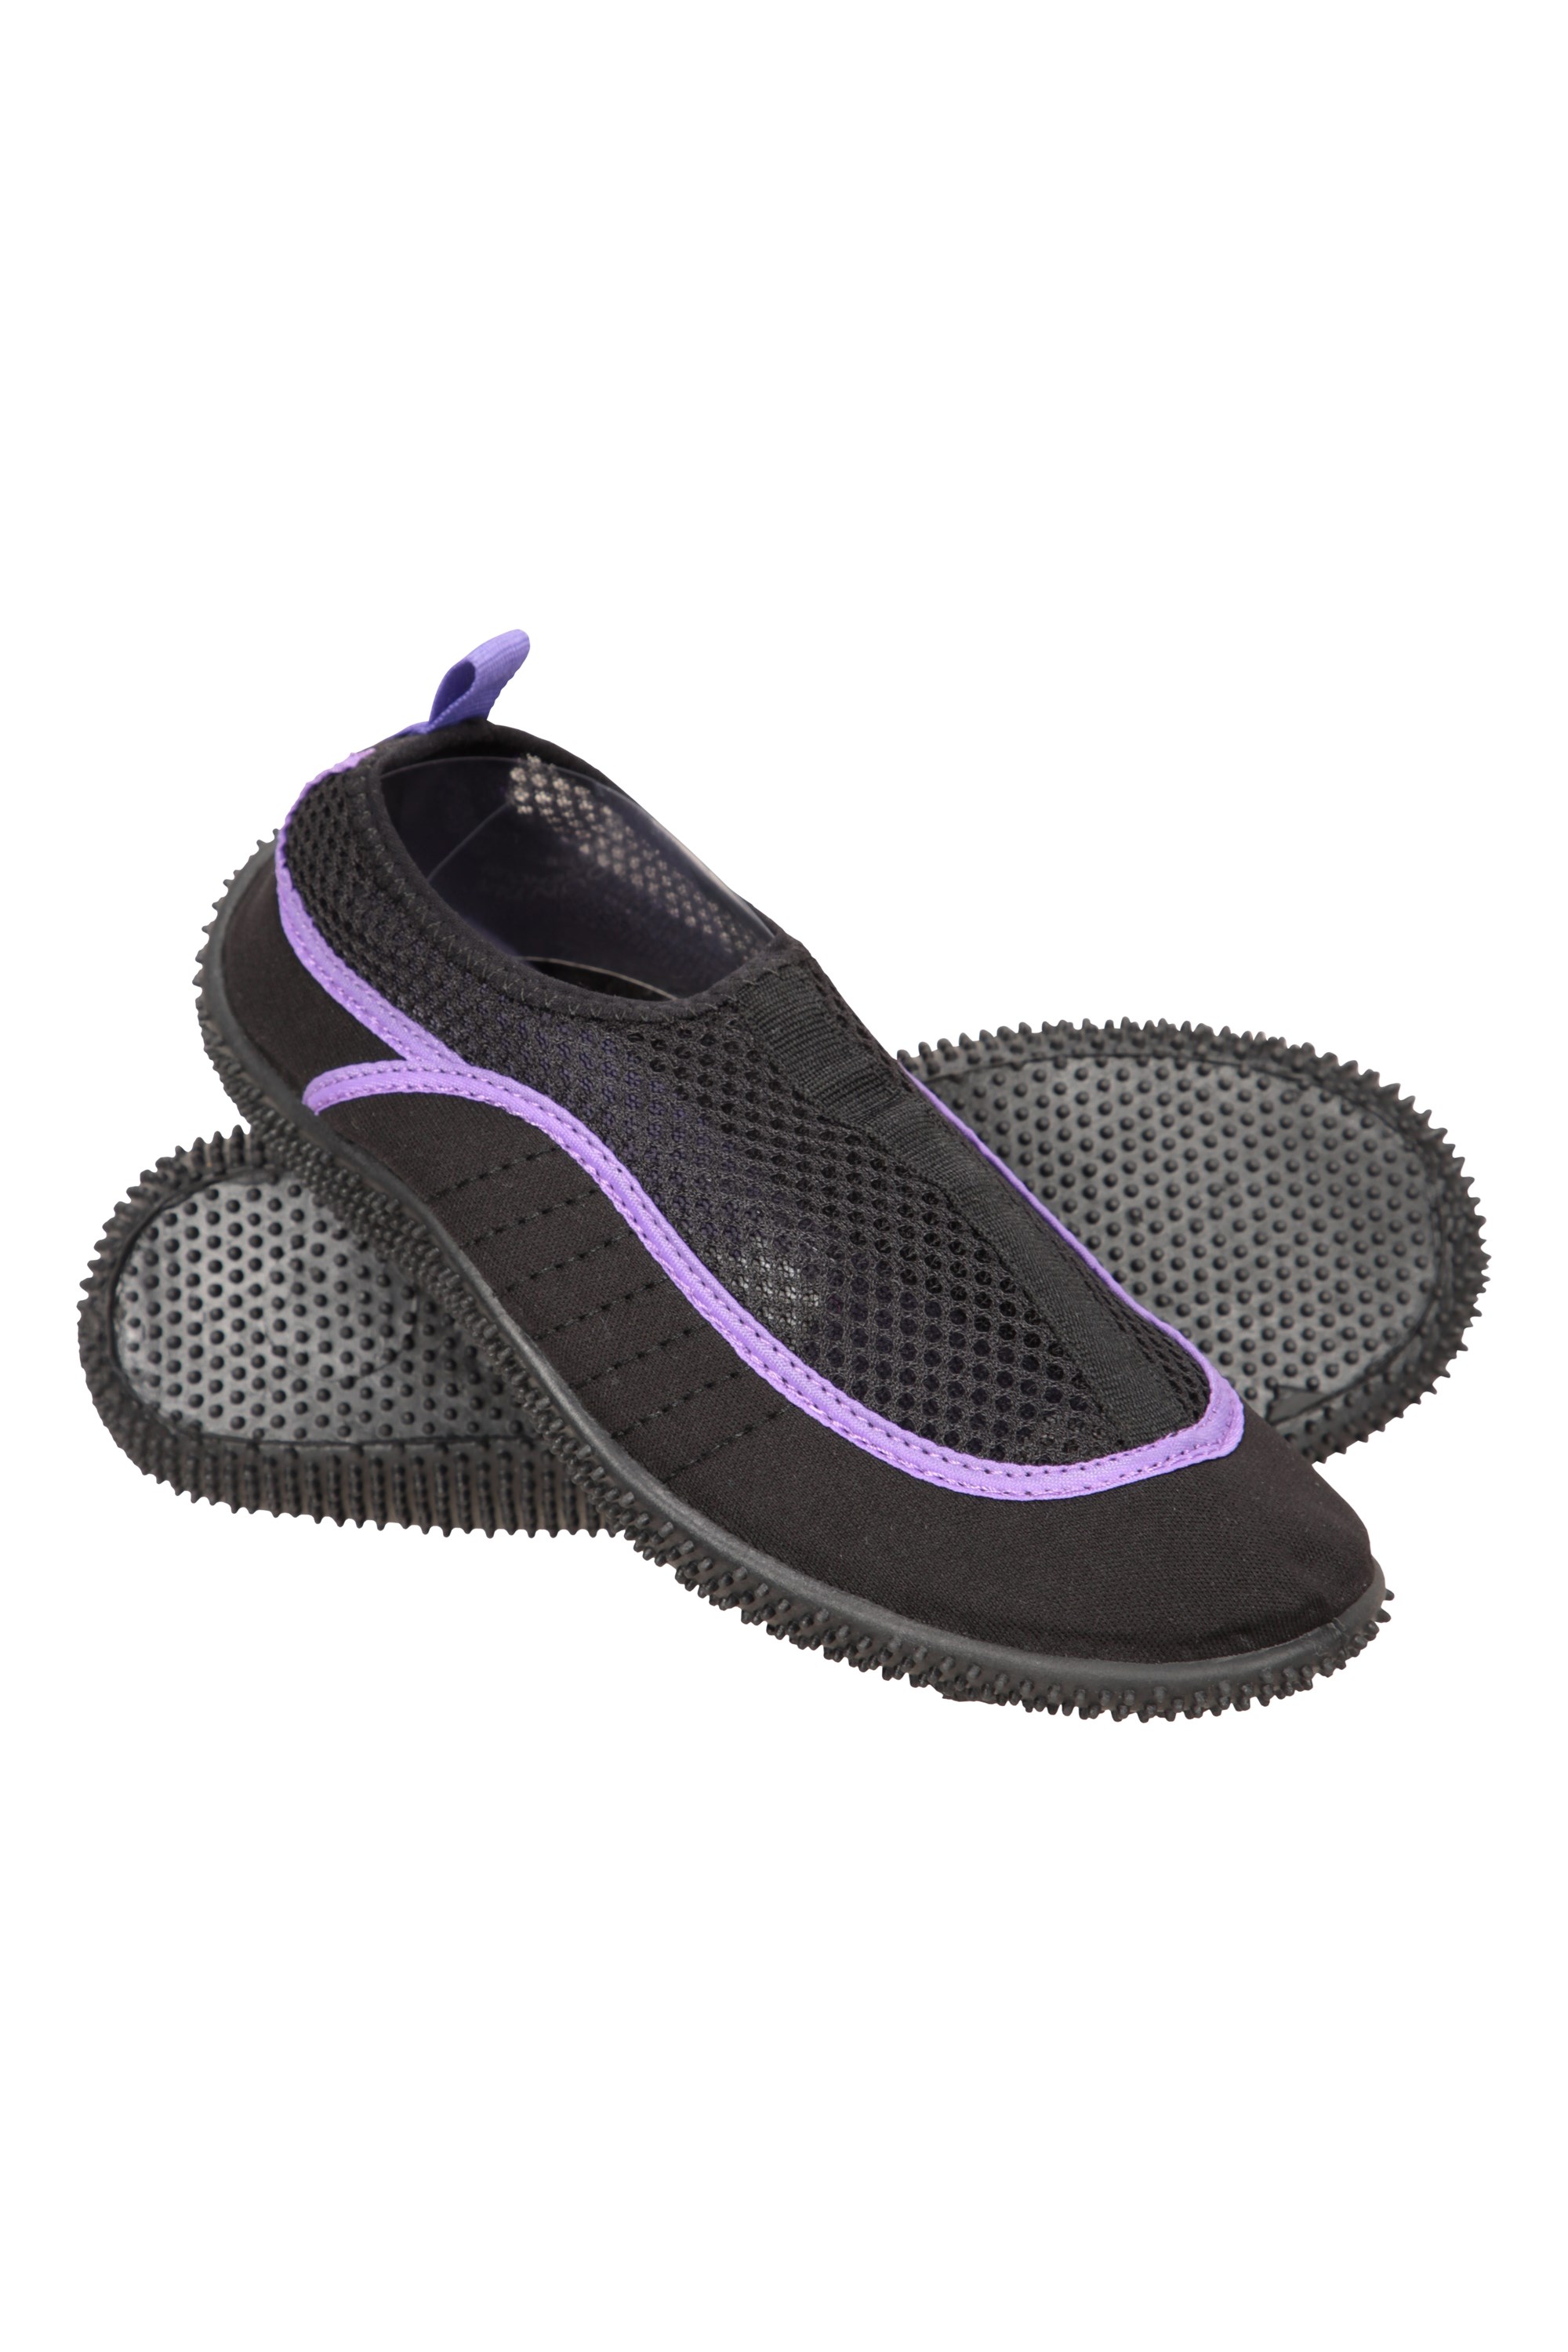 Bermuda Womens Aqua Shoes - Purple